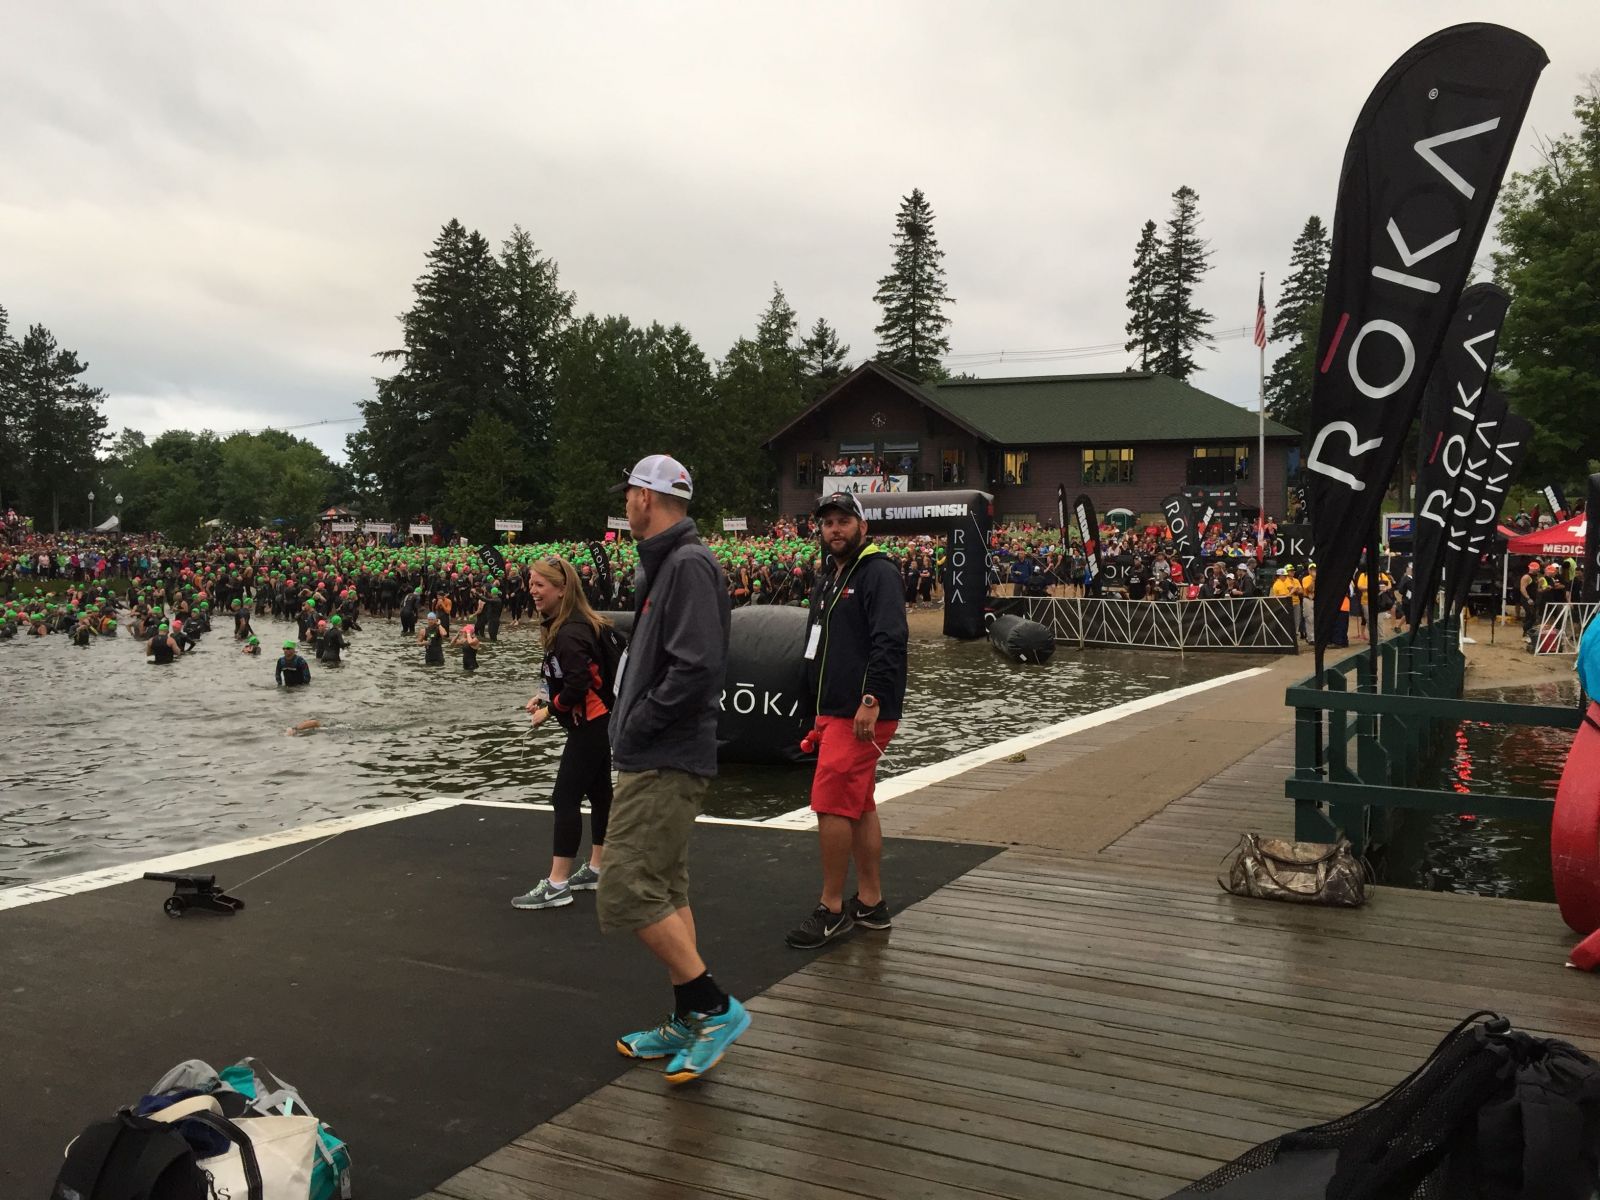 ironman Lake Placid swim start - 2&#44;500 athletes about to hit the water!